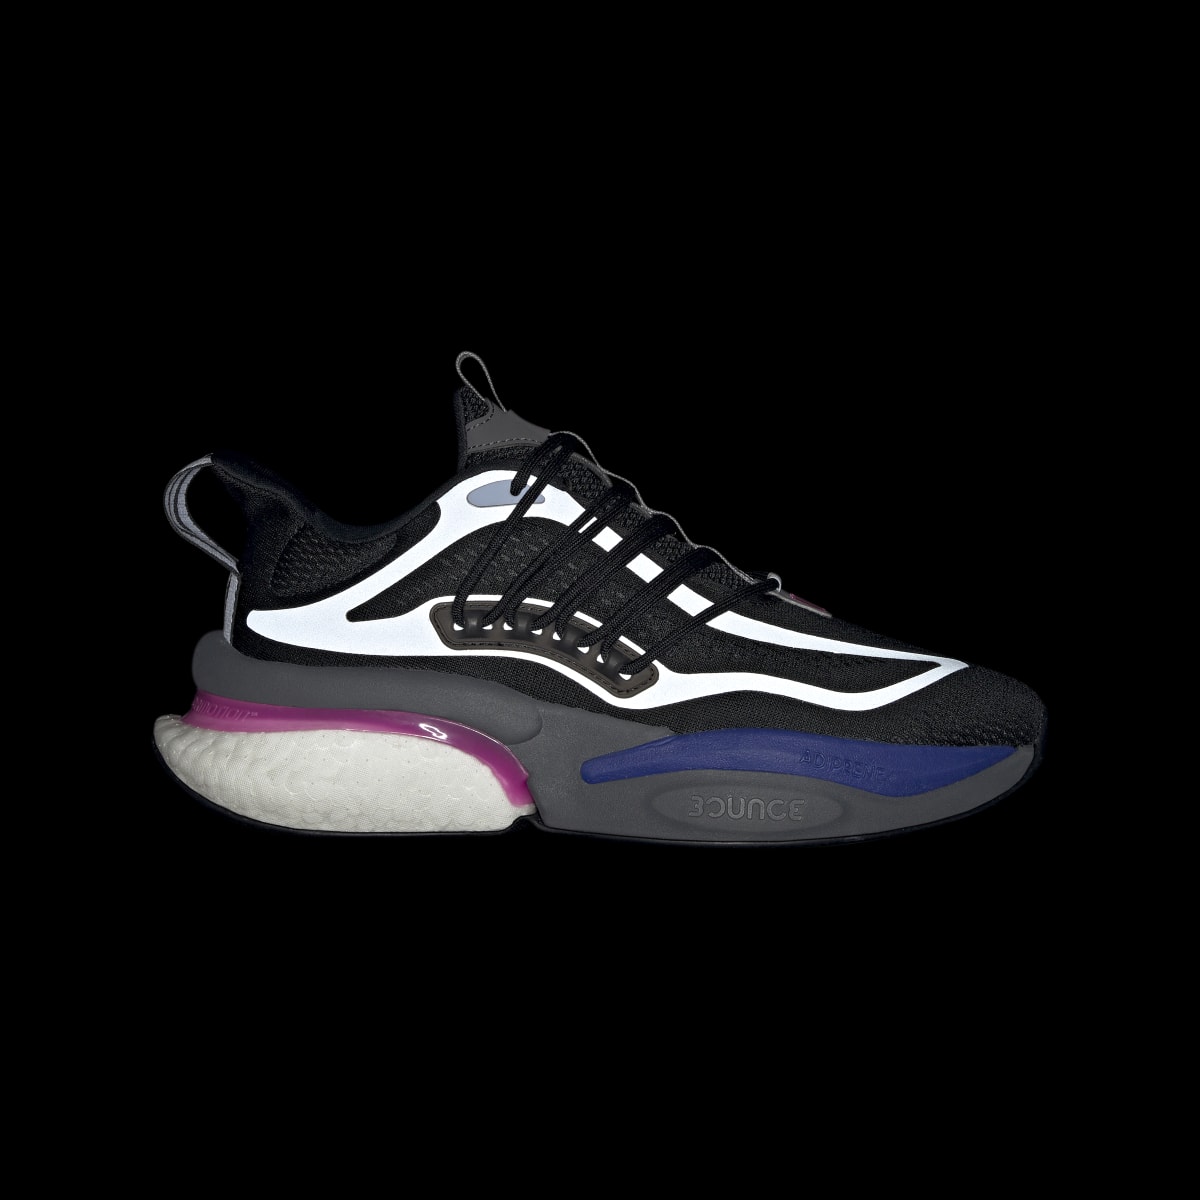 Adidas Alphaboost V1 Shoes. 5